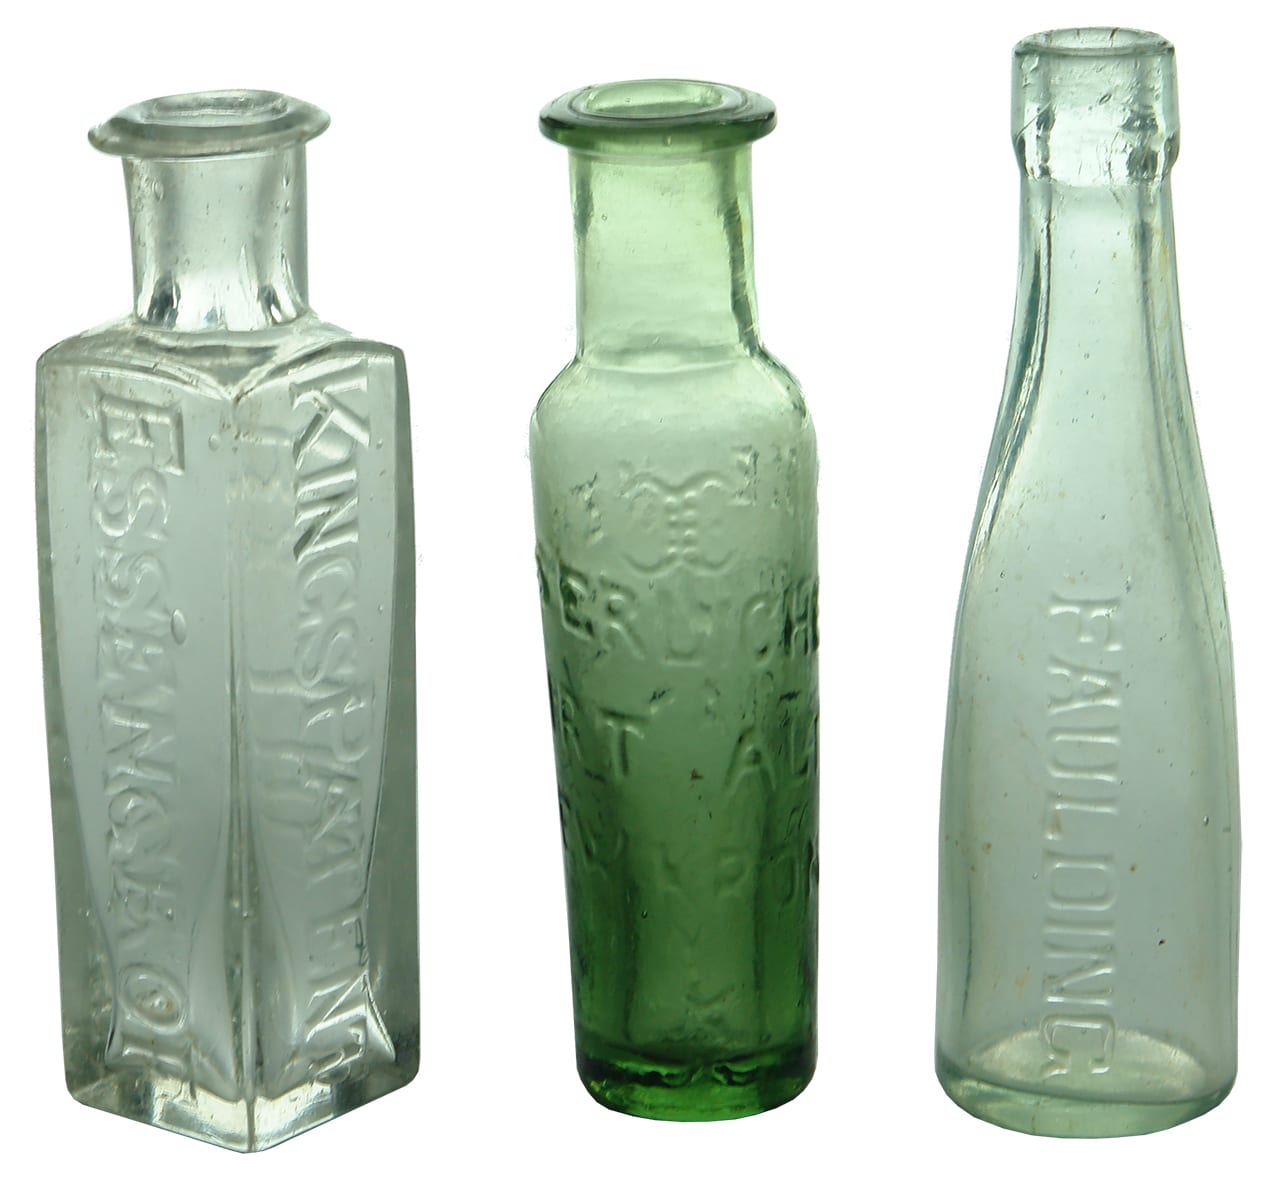 Collection Sample Miniature Bottles